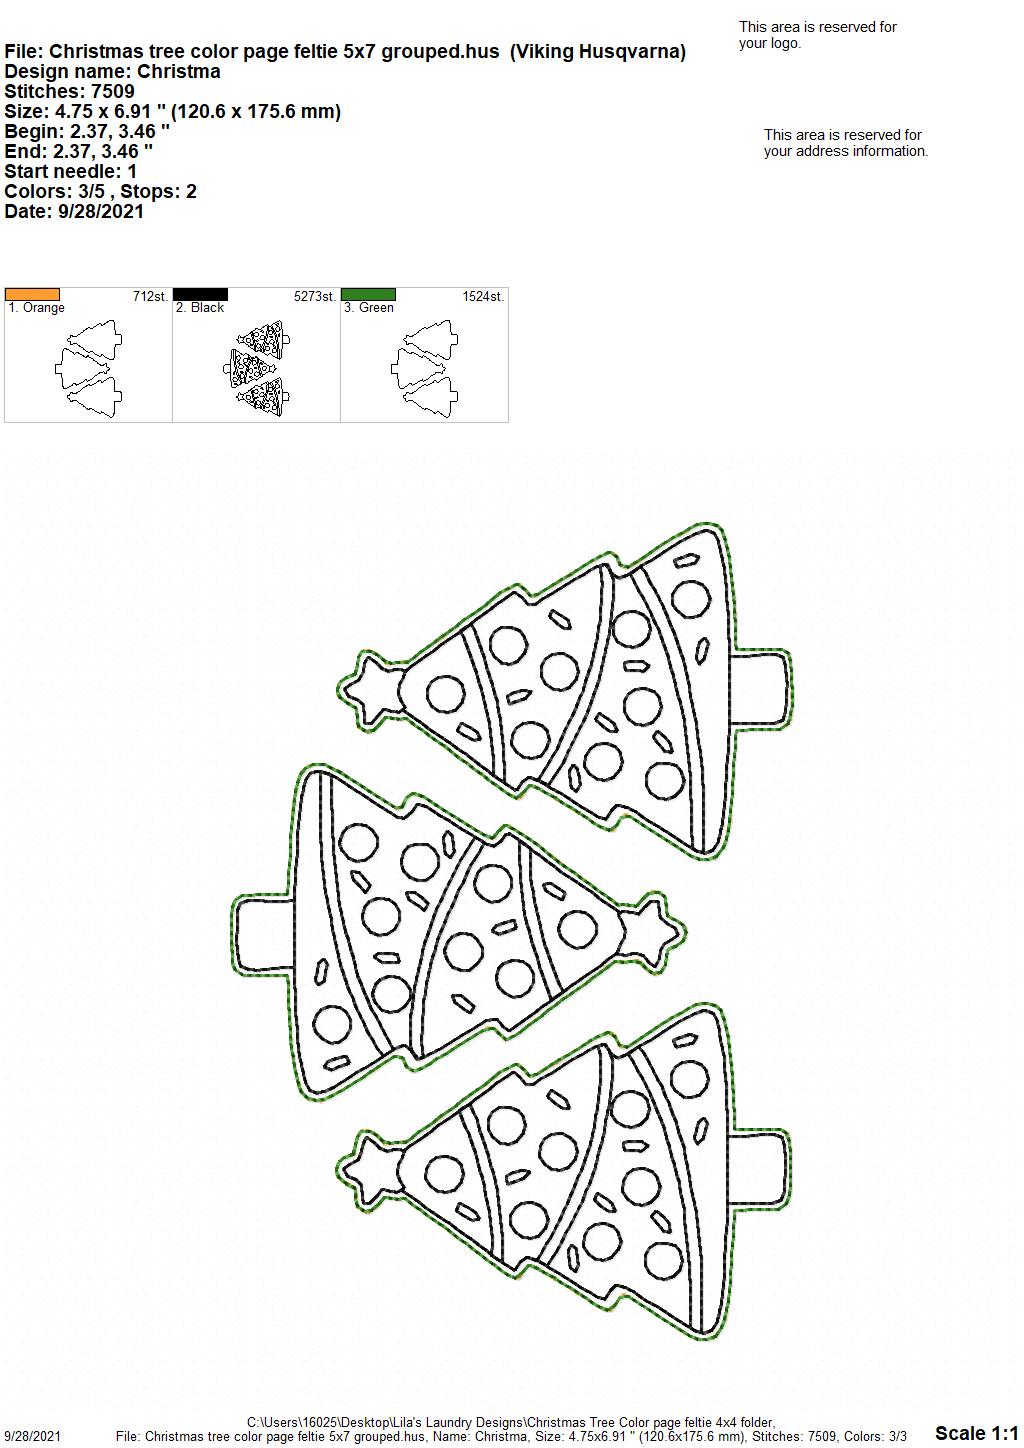 Christmas Tree Color Page Feltie - Digital Embroidery Design